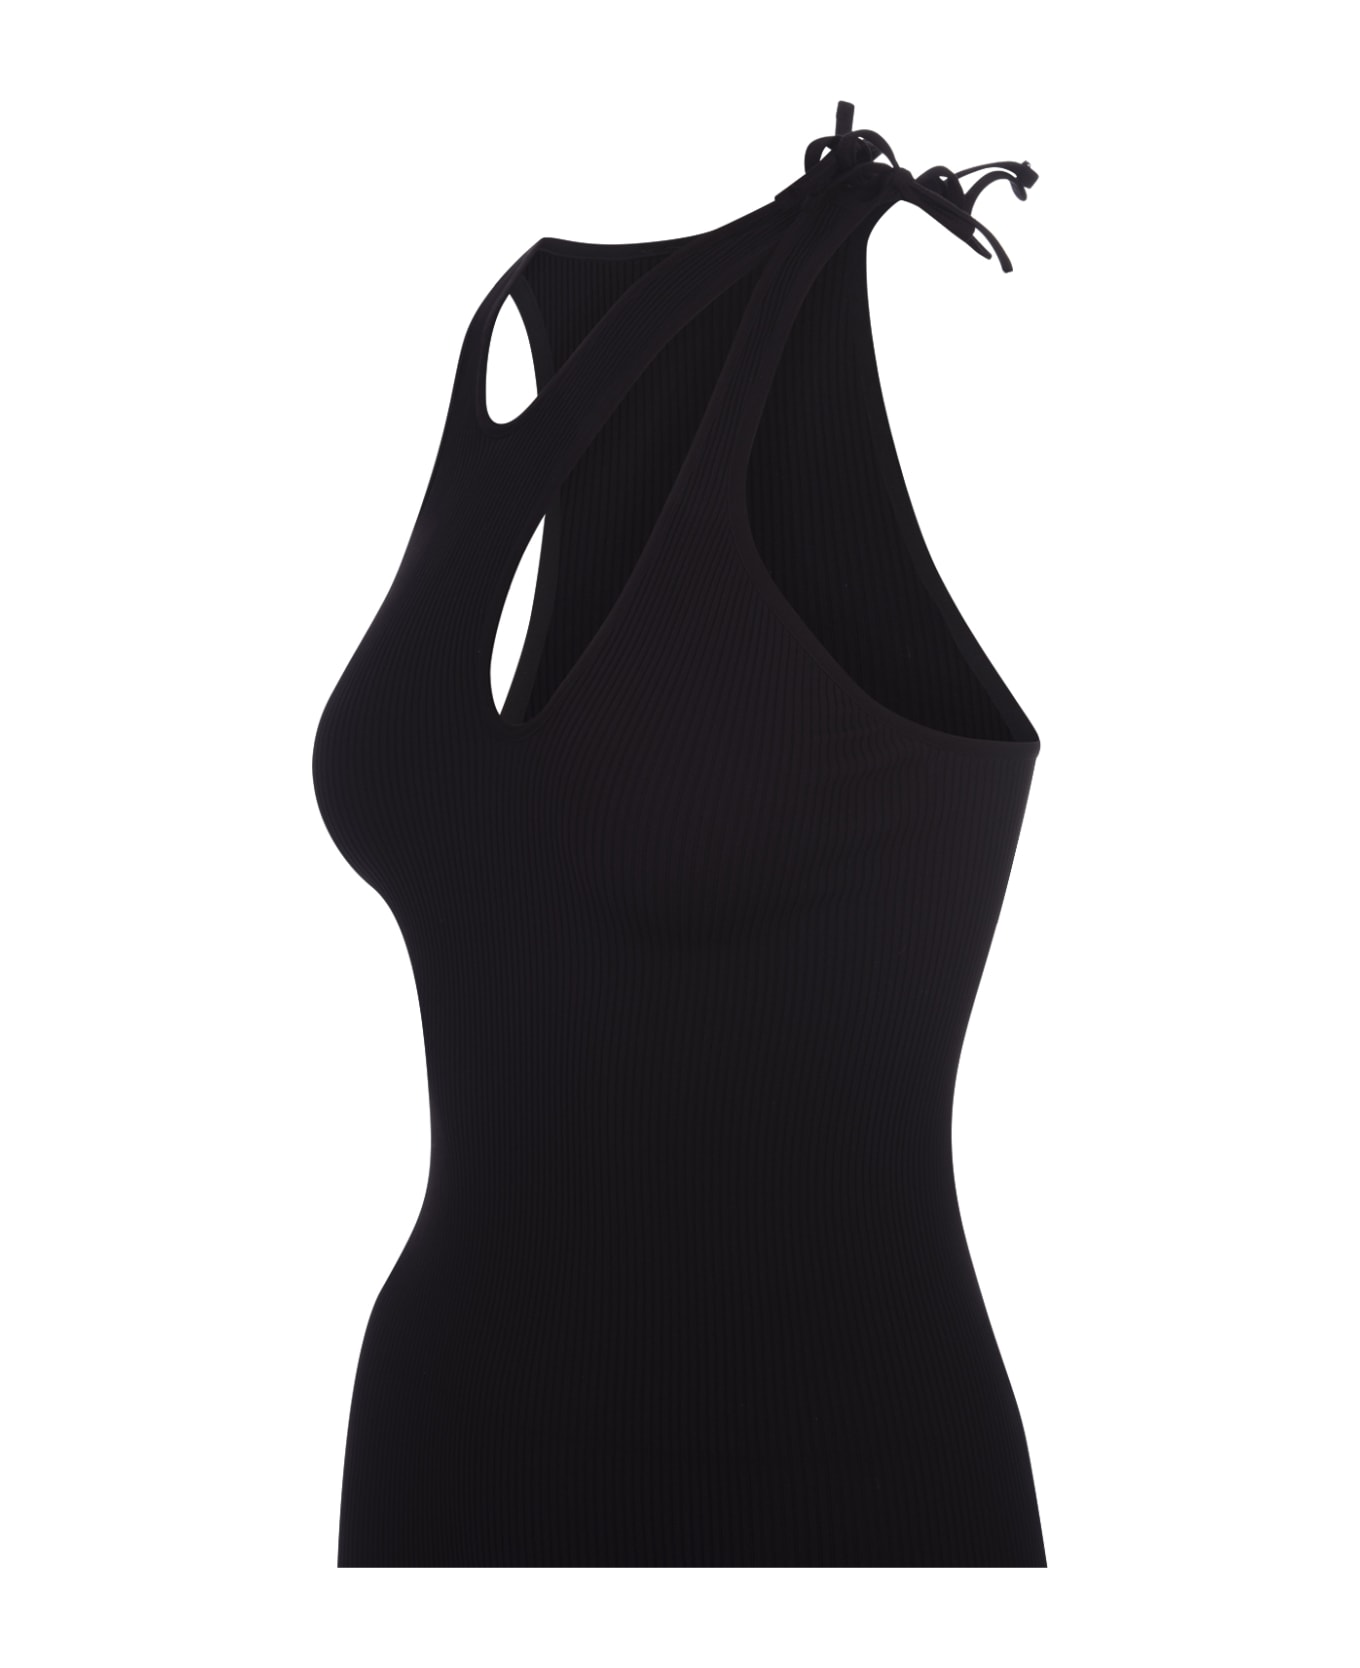 ANDREĀDAMO Black Short Sheath Dress With Cut-out - Black